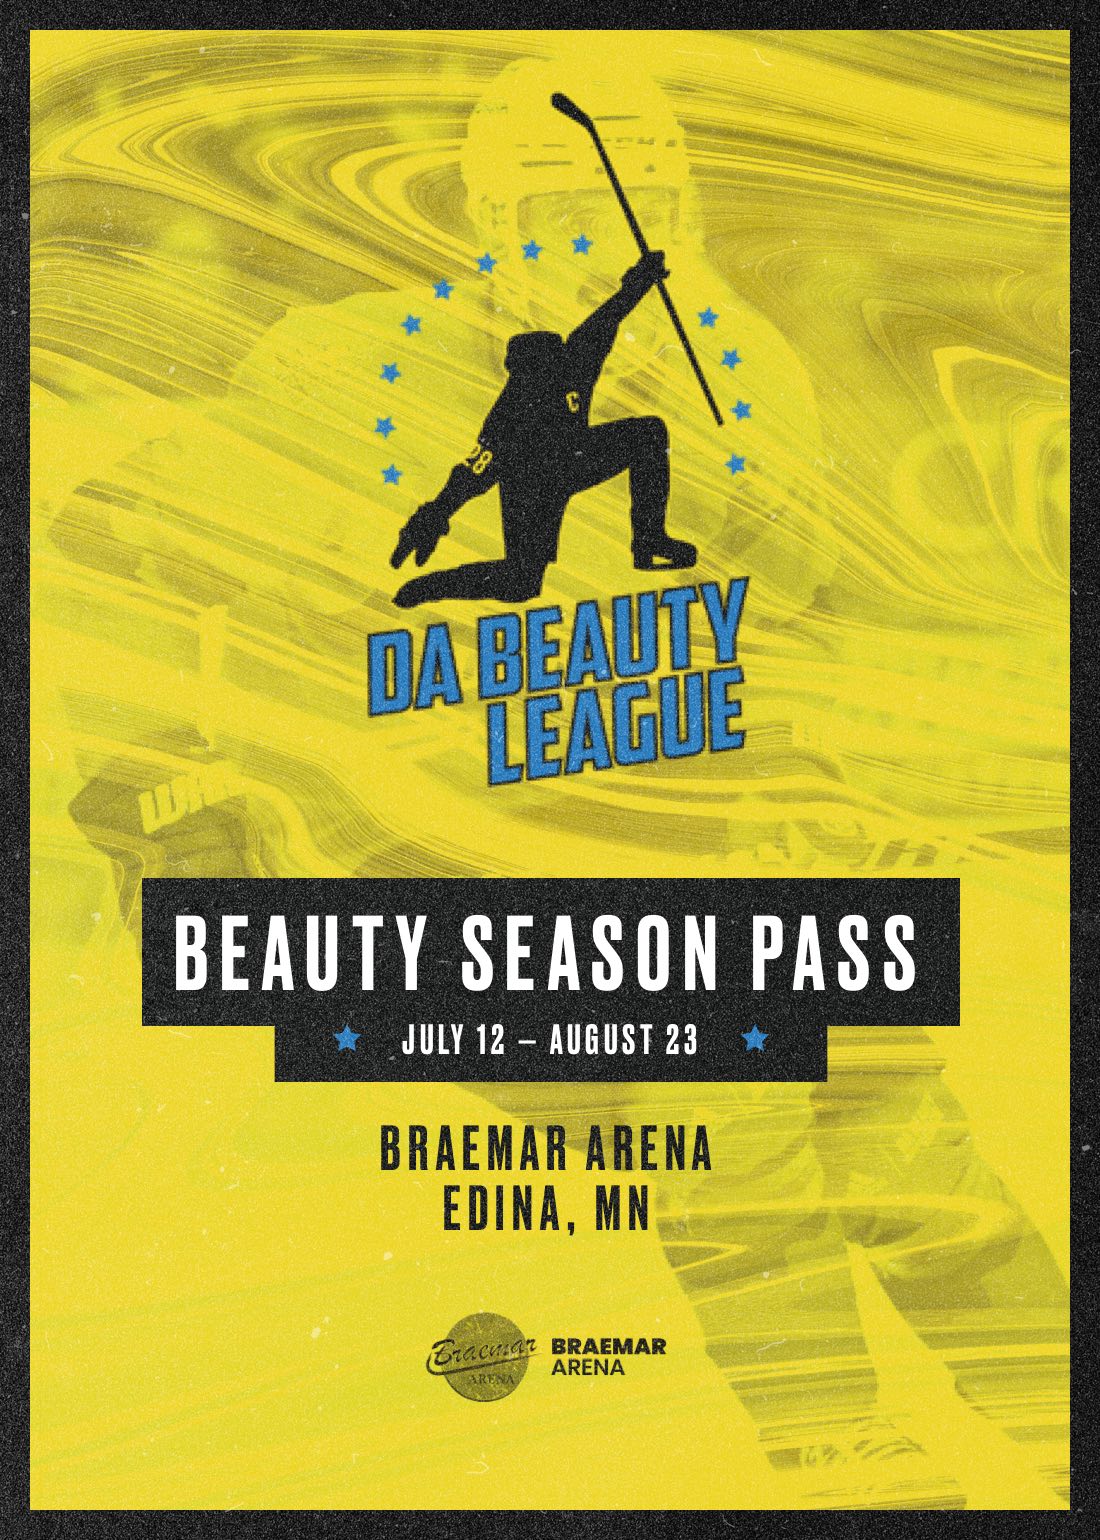 Beauty Season Pass Tickets at Braemar Arena in Edina by Da Beauty